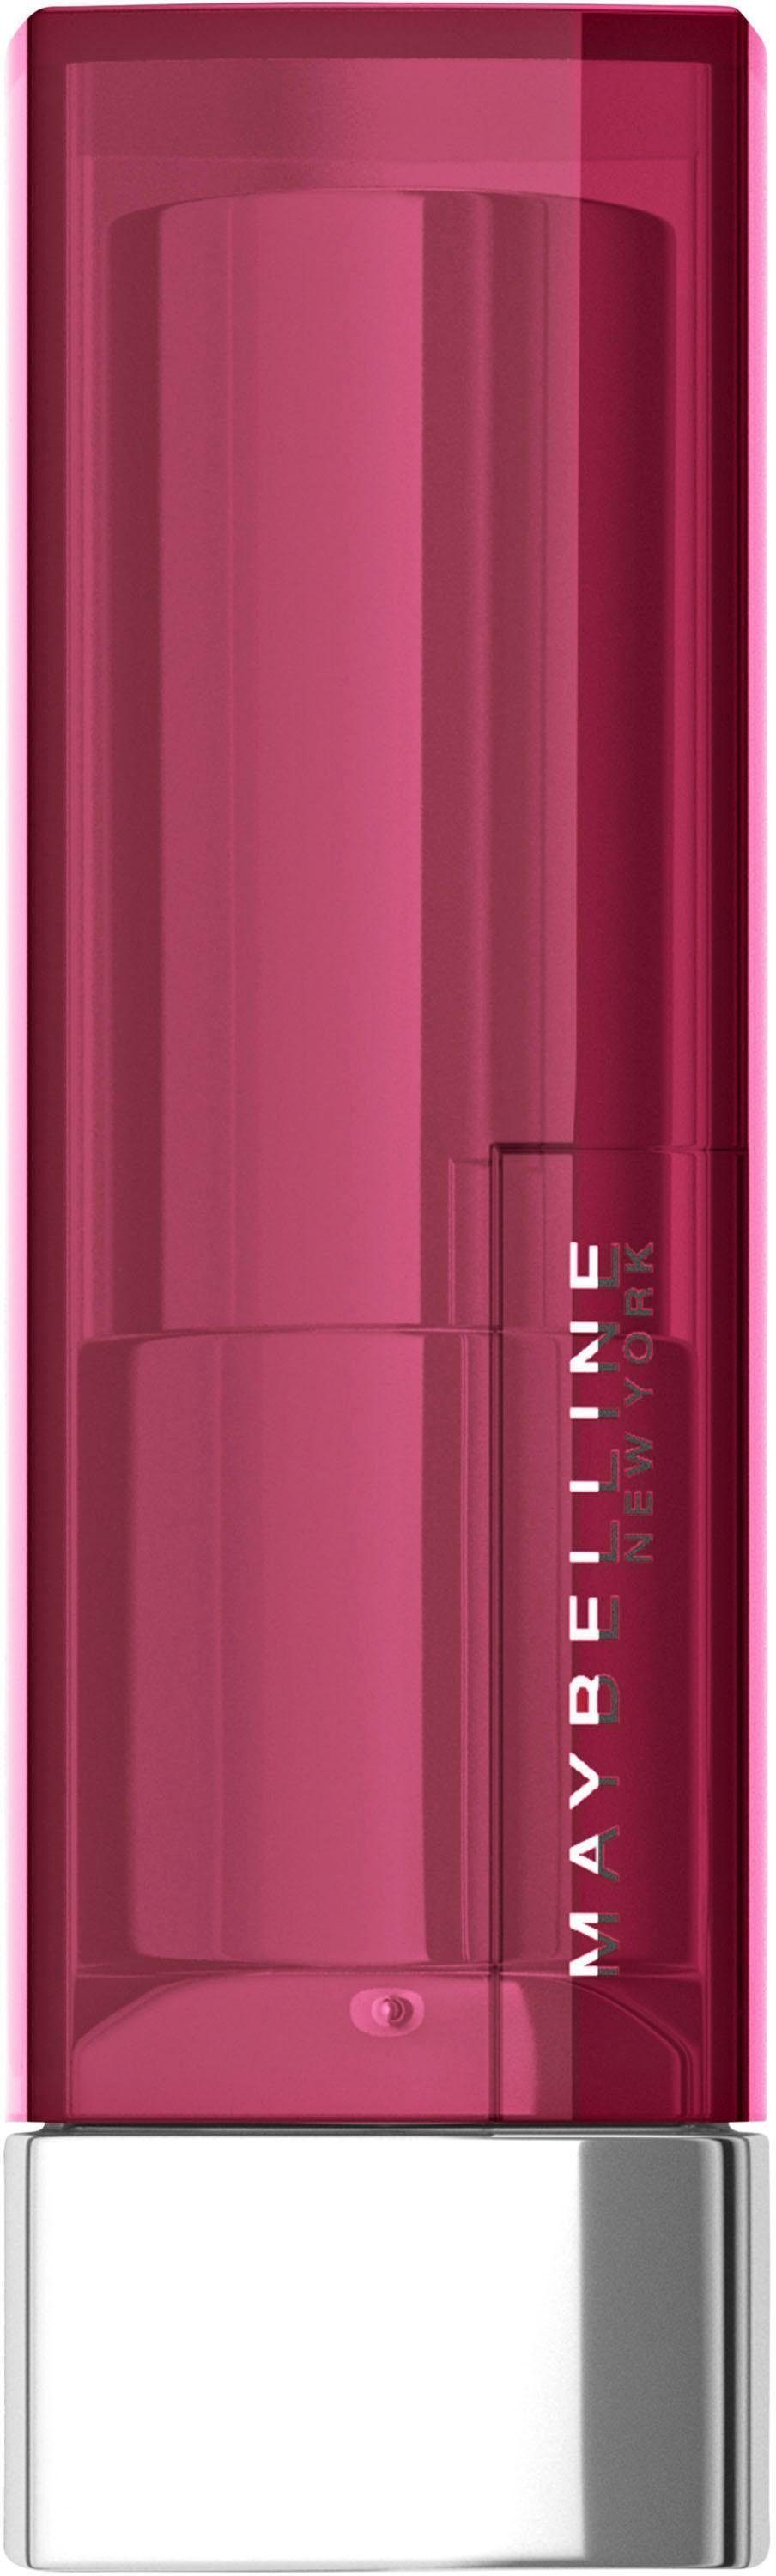 MAYBELLINE NEW YORK Pink Pose Creams 233 Color Lippenstift the Sensational